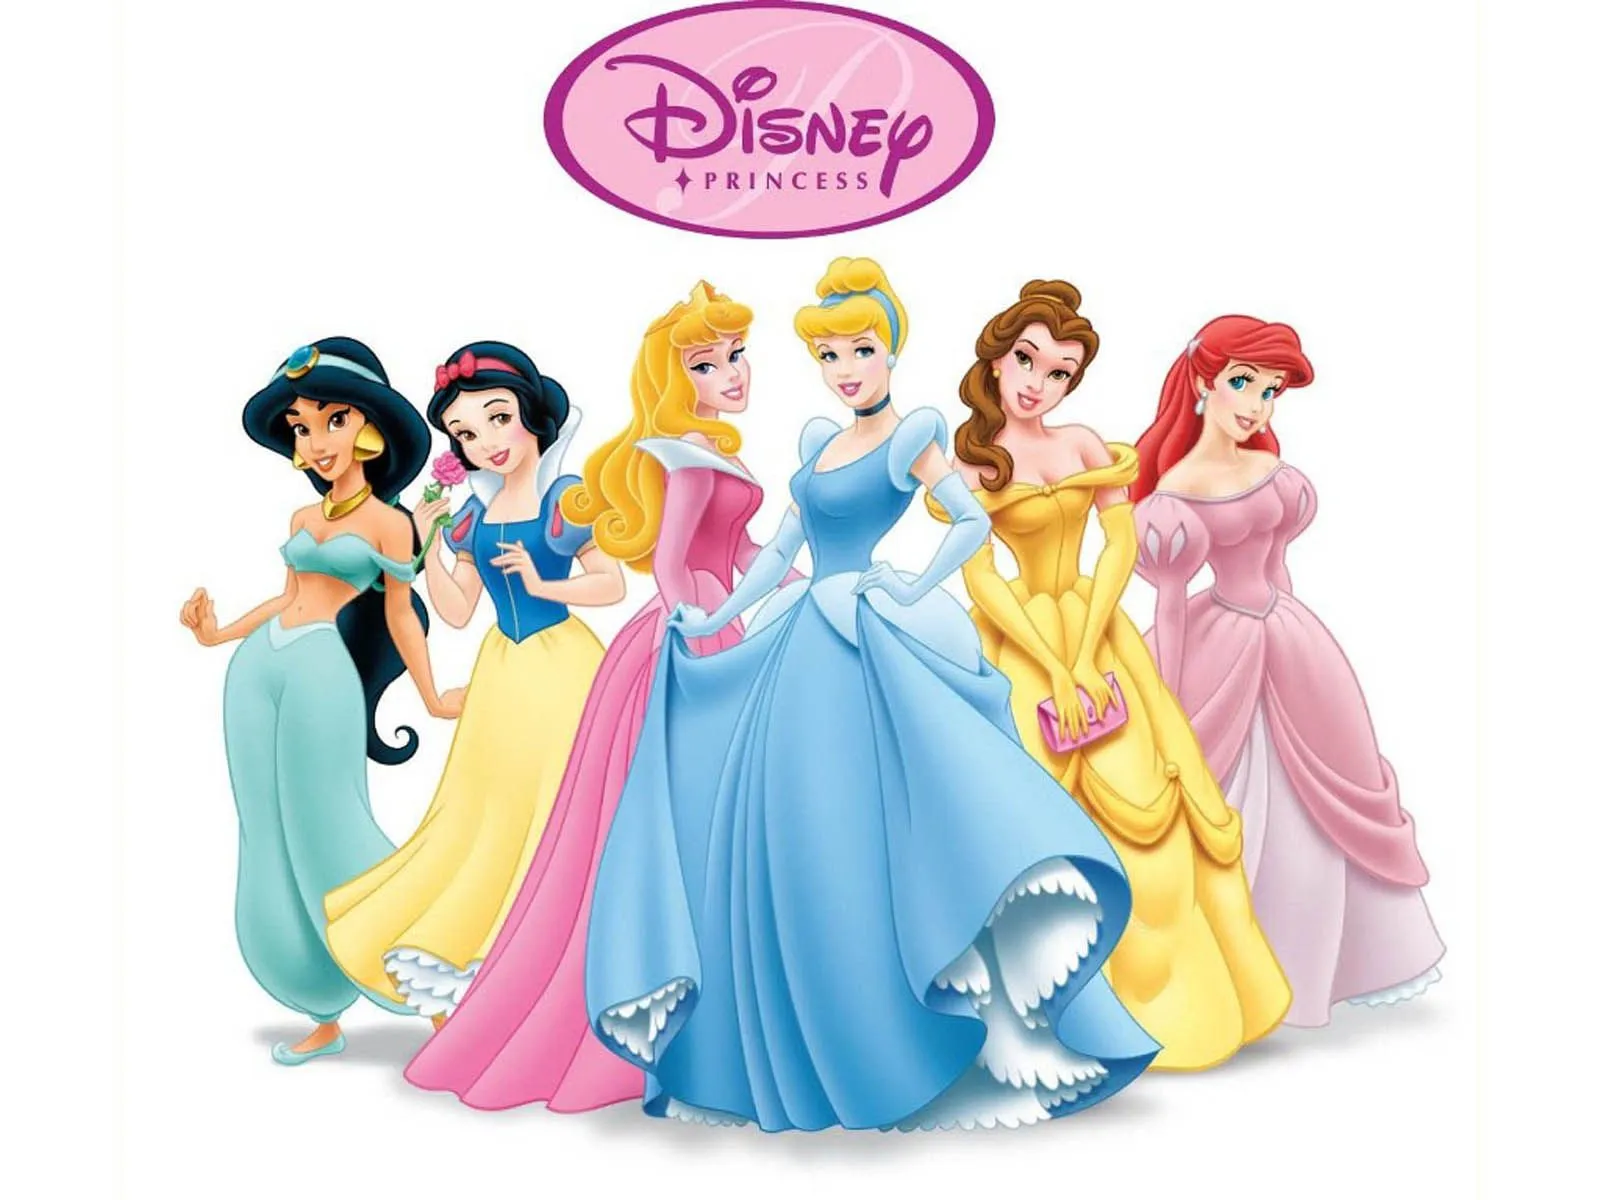 Free vector princess Disney - Imagui